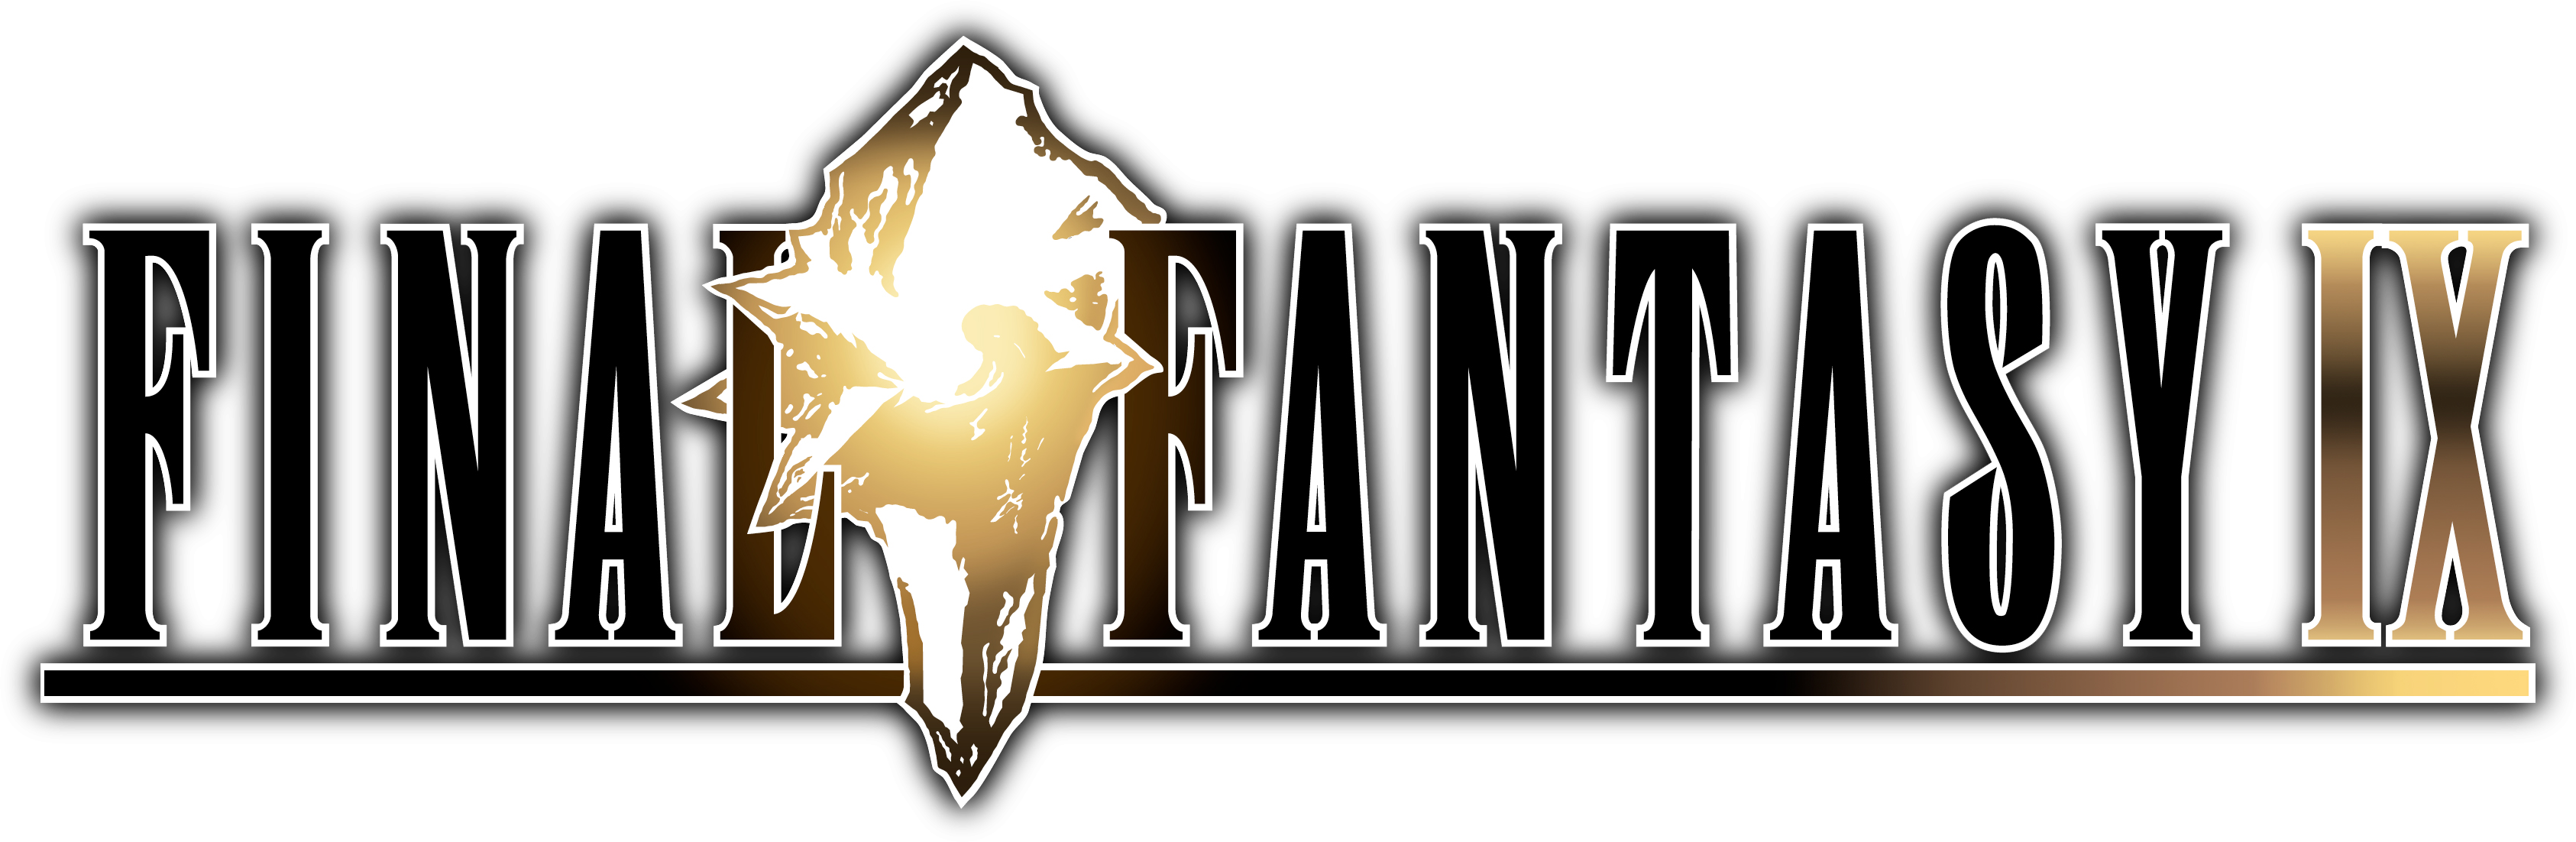 Final Fantasy Ix Logo